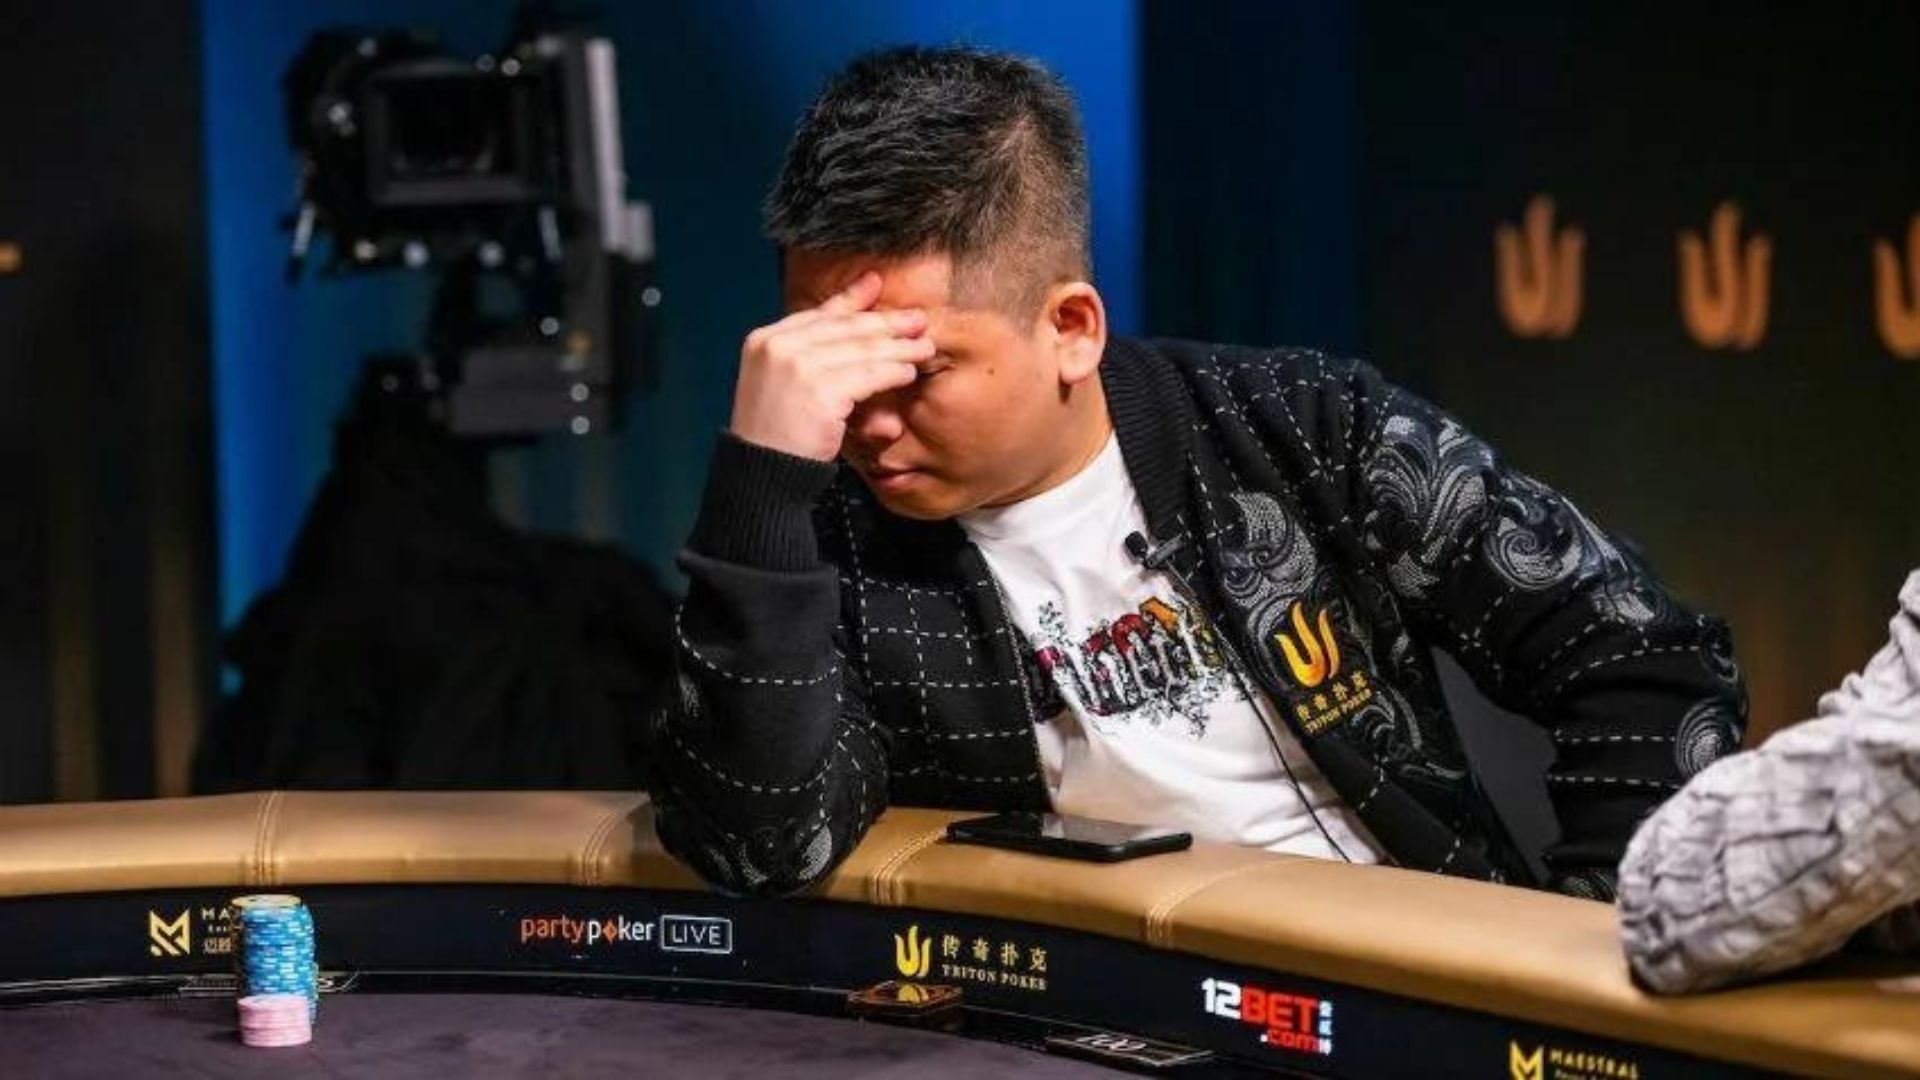 A Man wearing a Black jacket playing poker